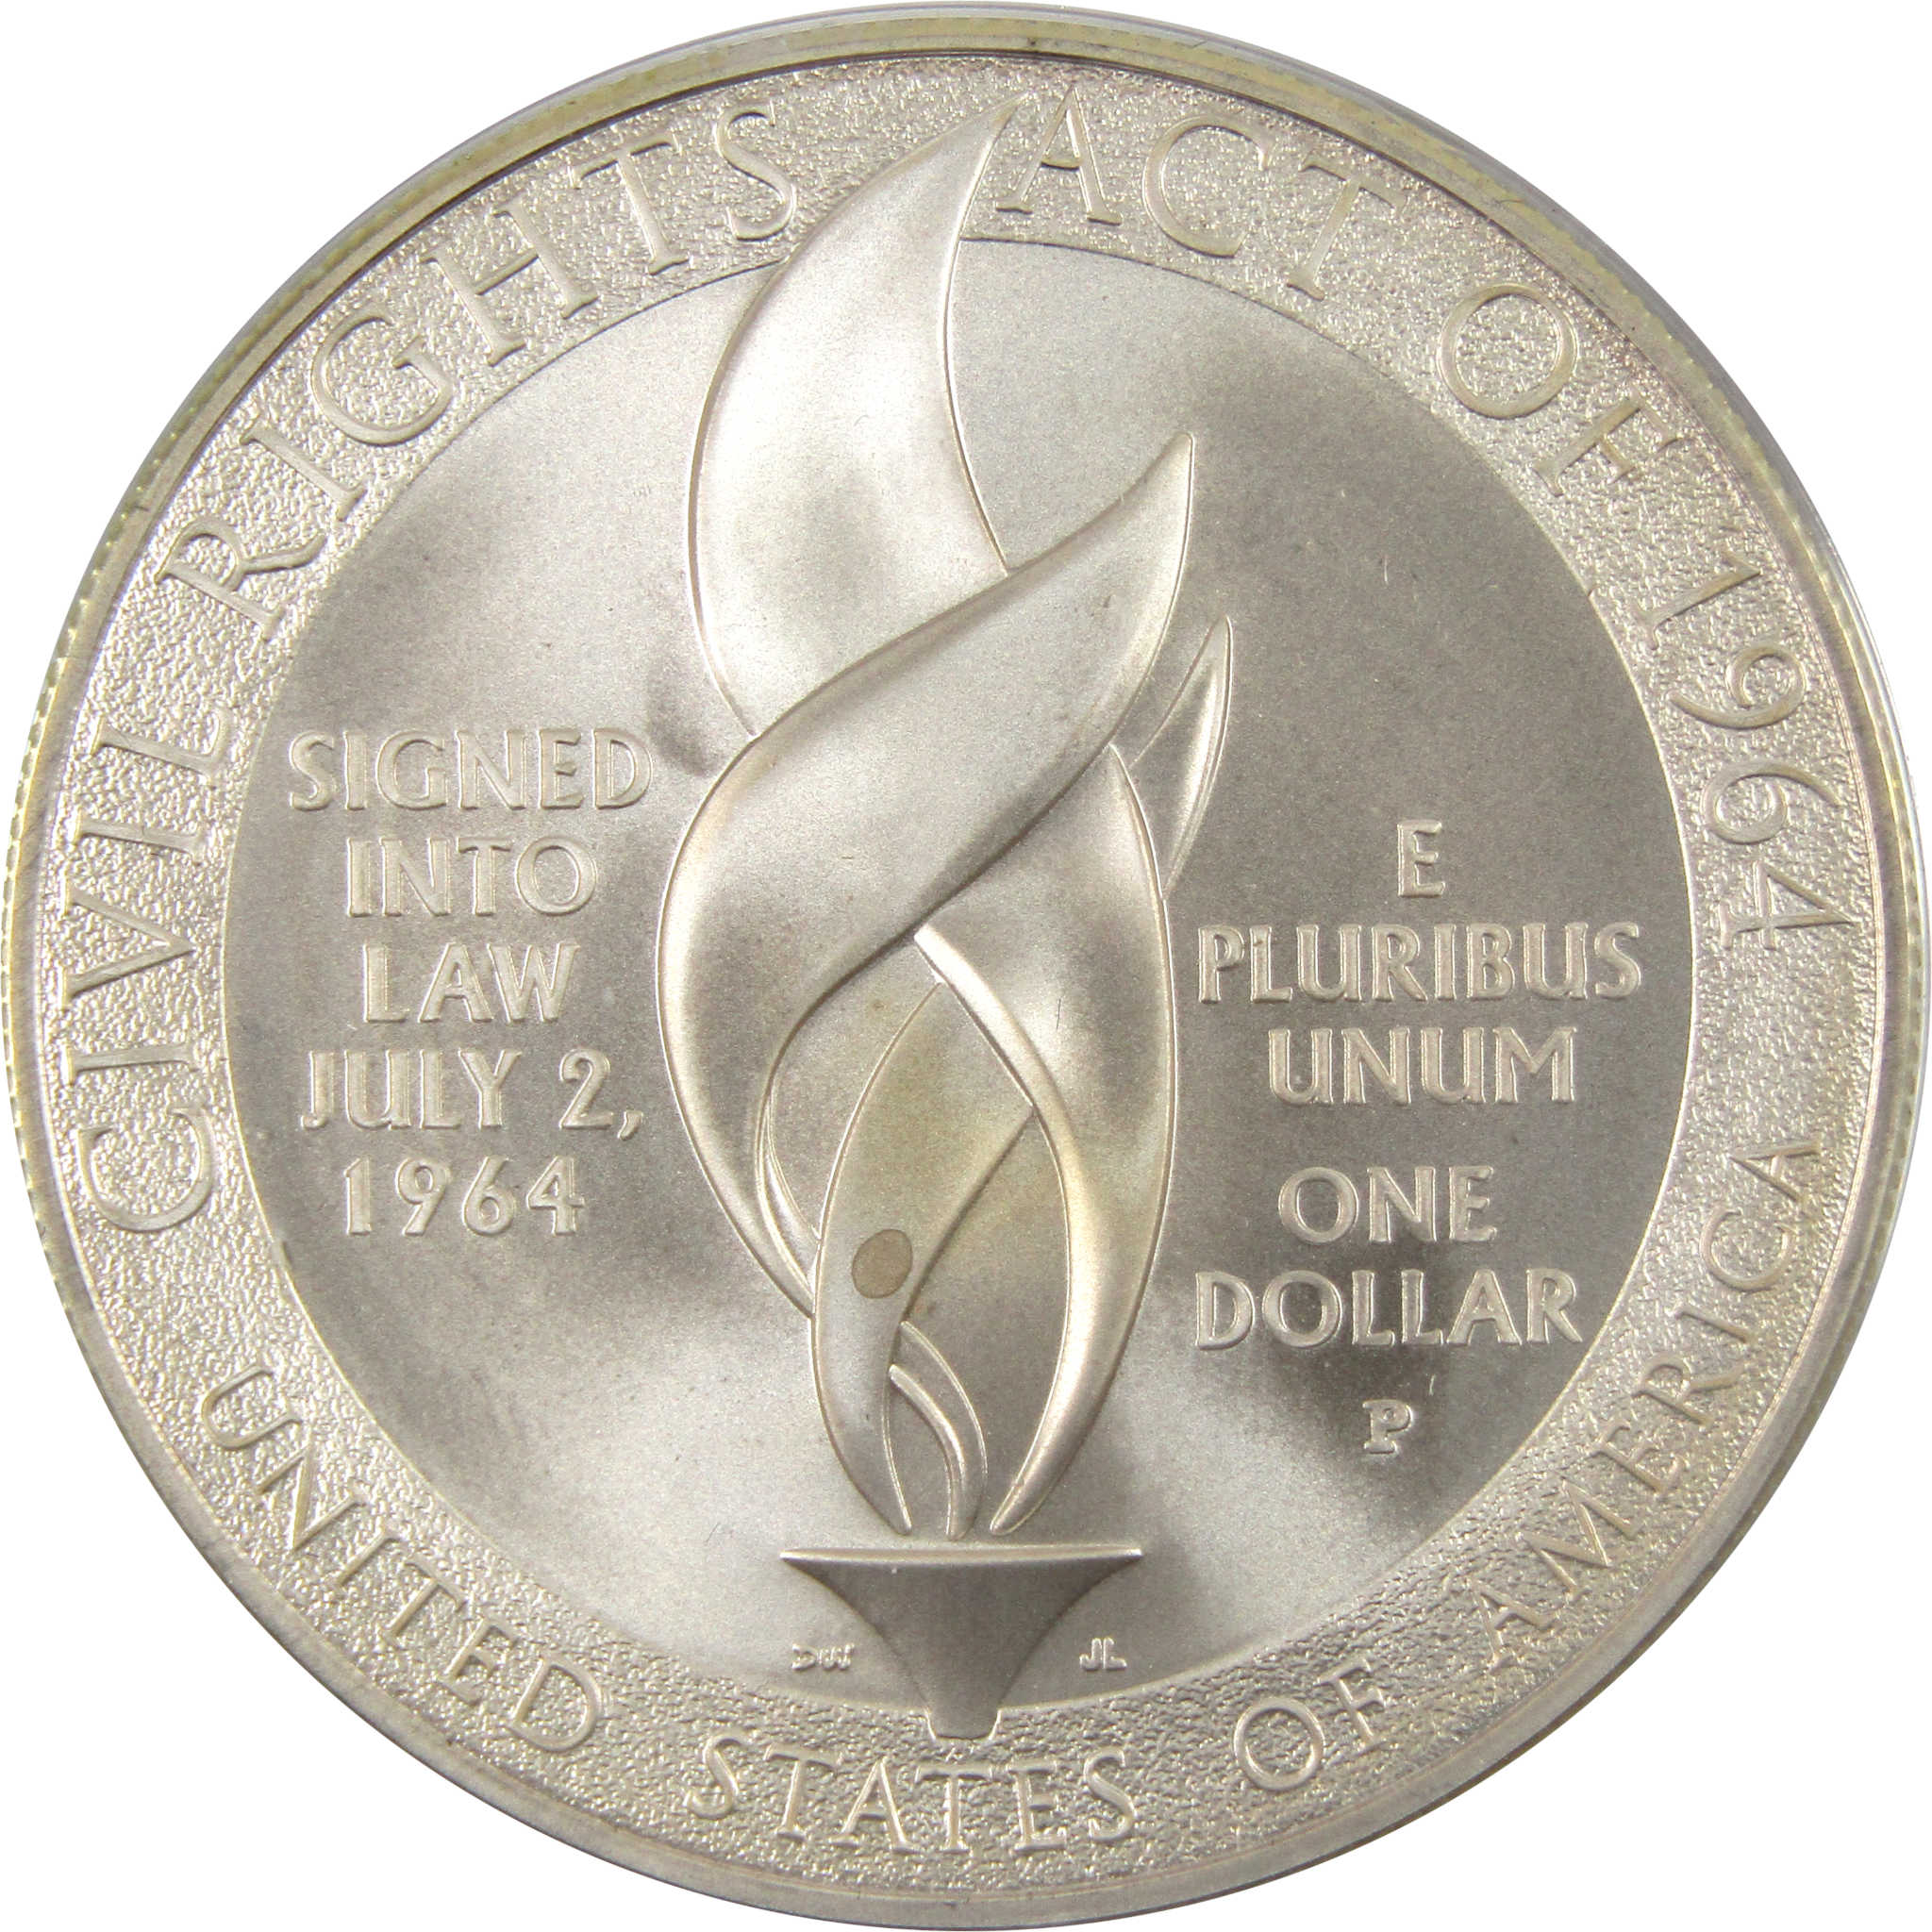 Civil Rights Act of 1964 Commemorative Dollar 2014 P Unc SKU:CPC2923